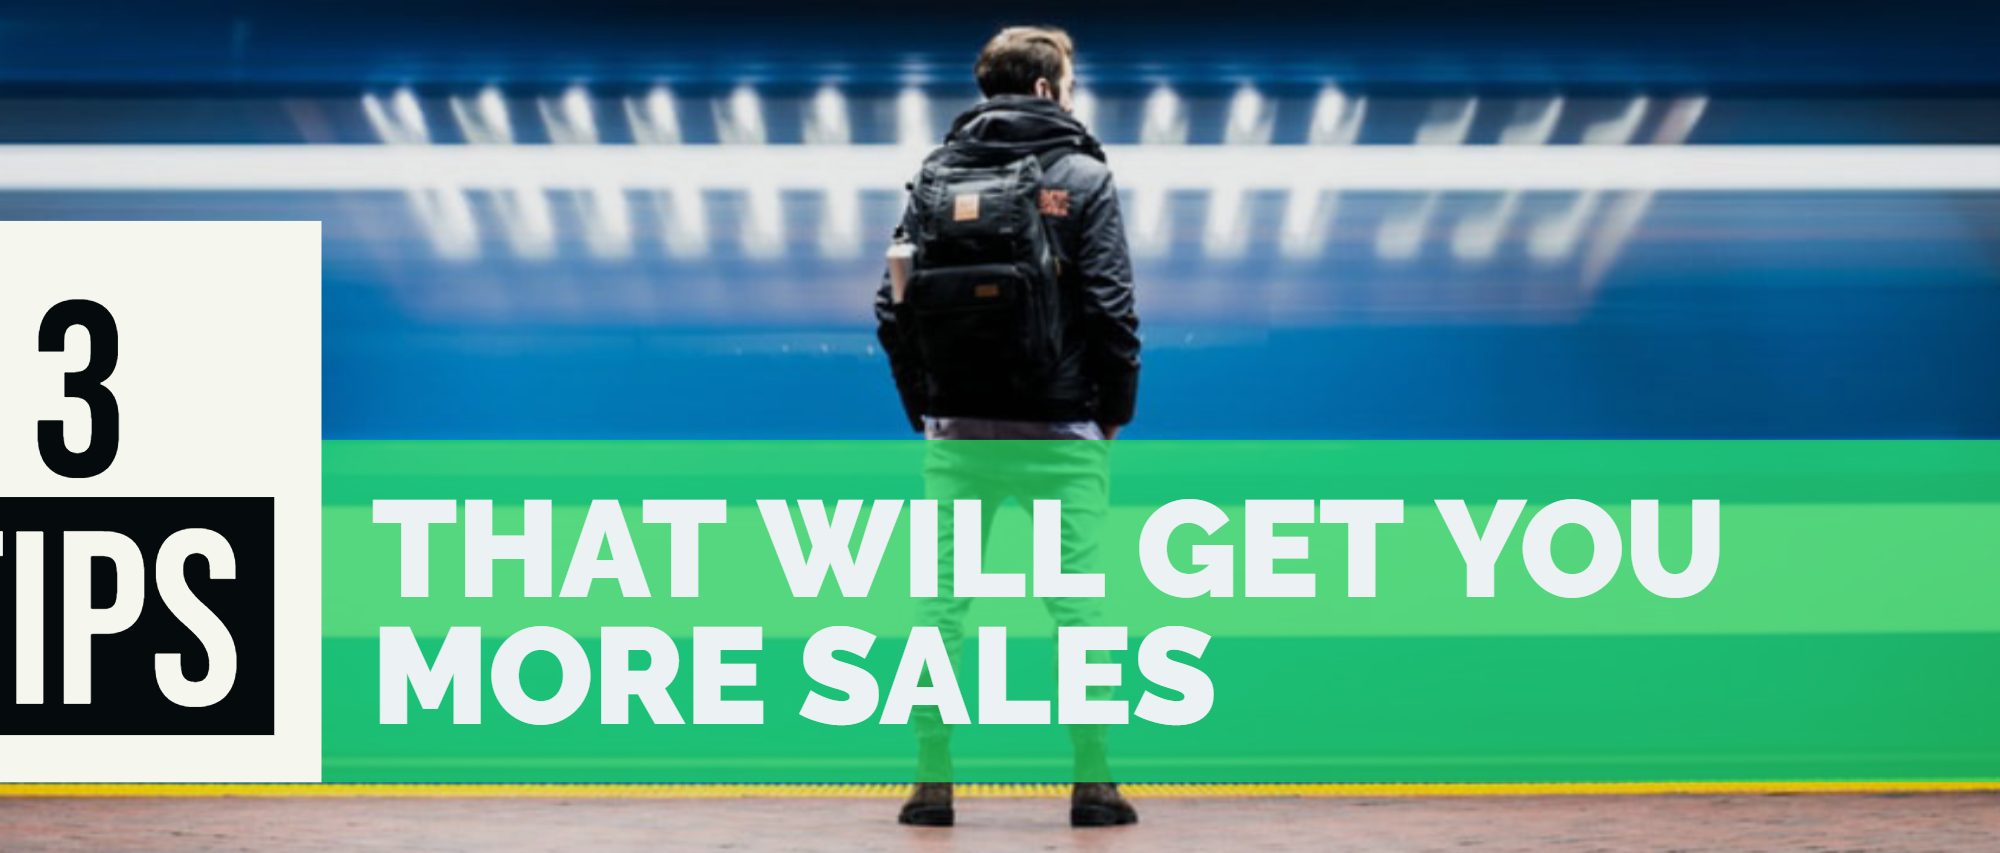 3 Tips That Will Get You More Sales Global Sales Consultant Global Sales Coach Motivational Speaker Tedx Speaker Forbes Entrepreneur AskMen Success Paul Argueta